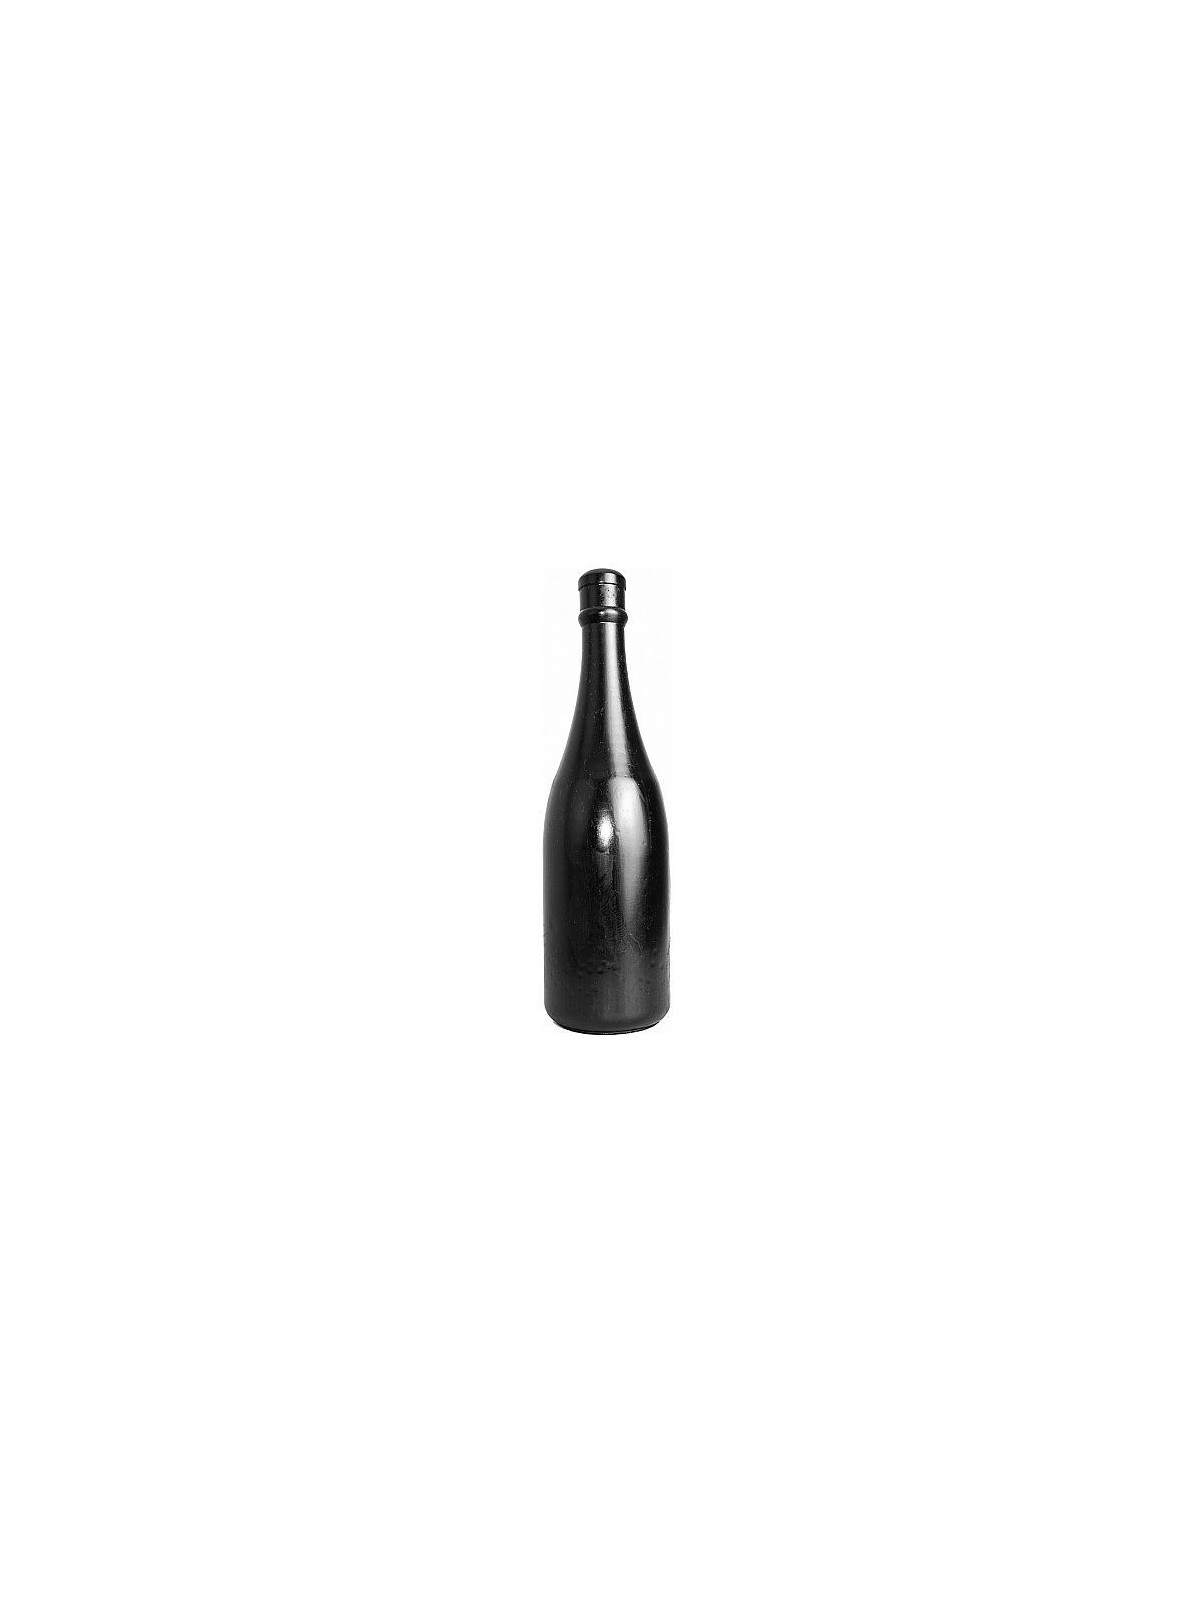 All Black Anal Bottle 34,5 cm - Comprar Juguetes fisting All Black - Fisting (1)